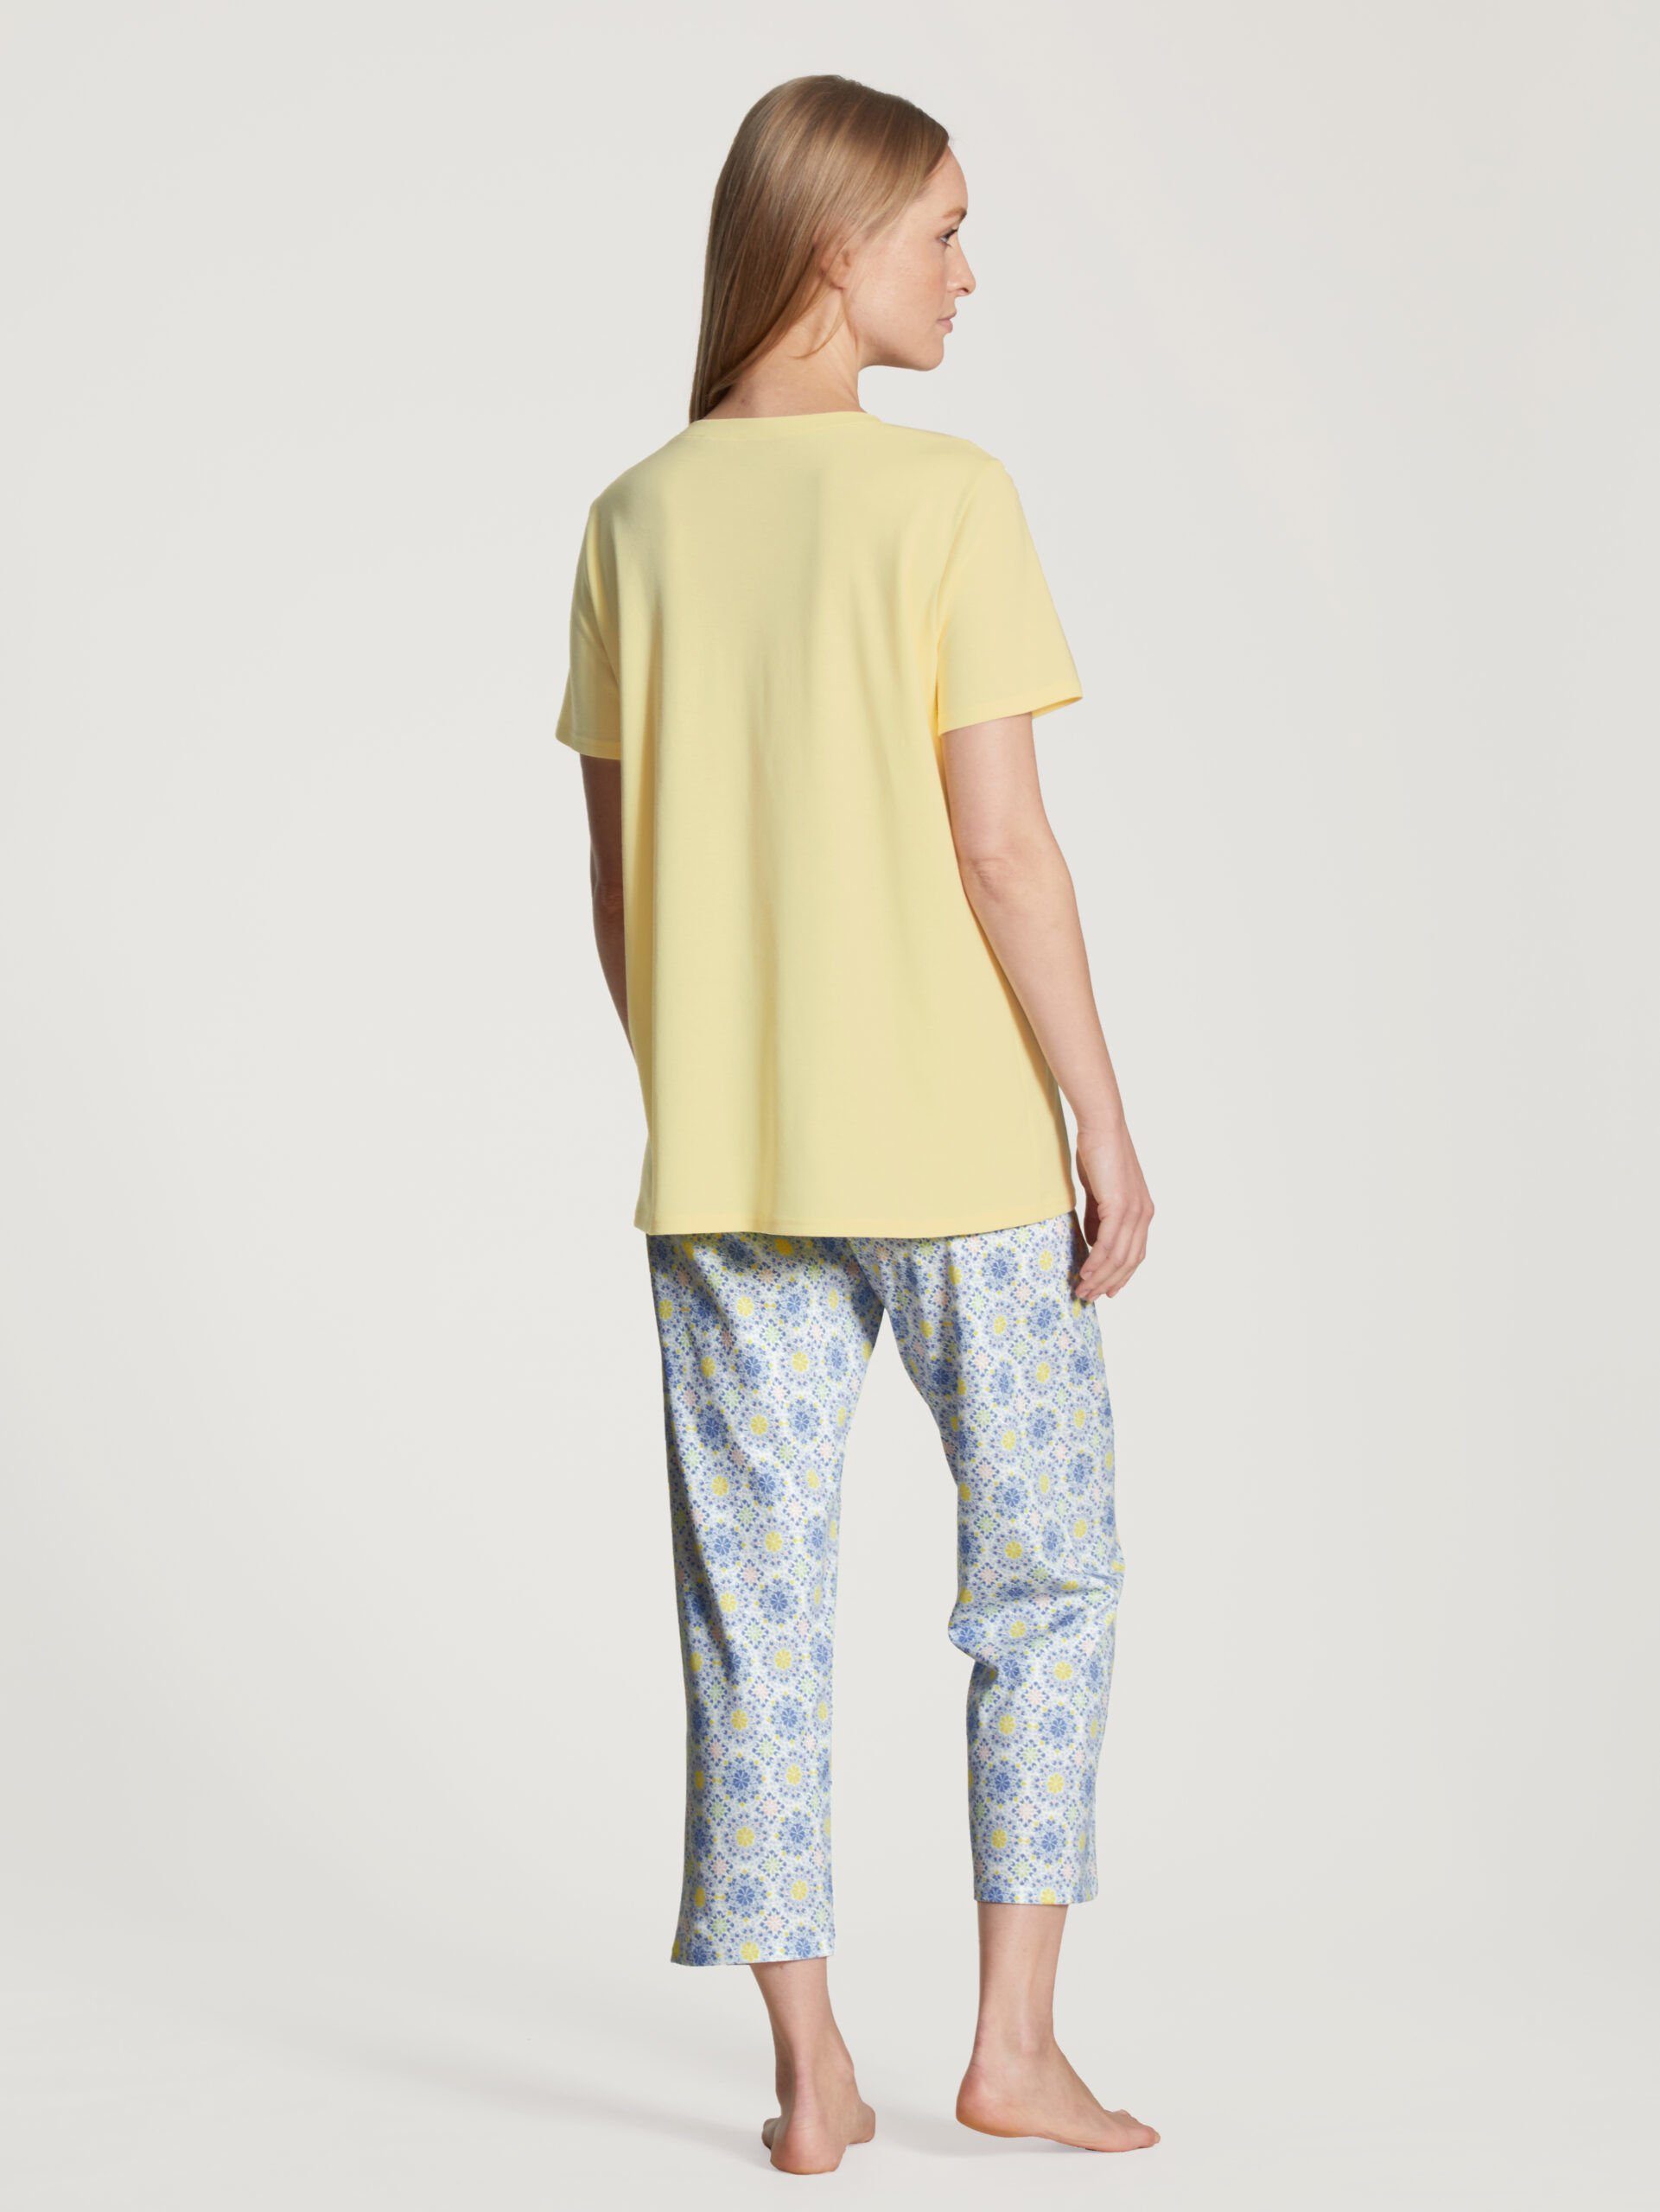 tlg., Stück) Capri-Pyjama Pyjama yellow 42357 buttercream 1 Calida CALIDA (1 1 gelb 7/8 Stück,